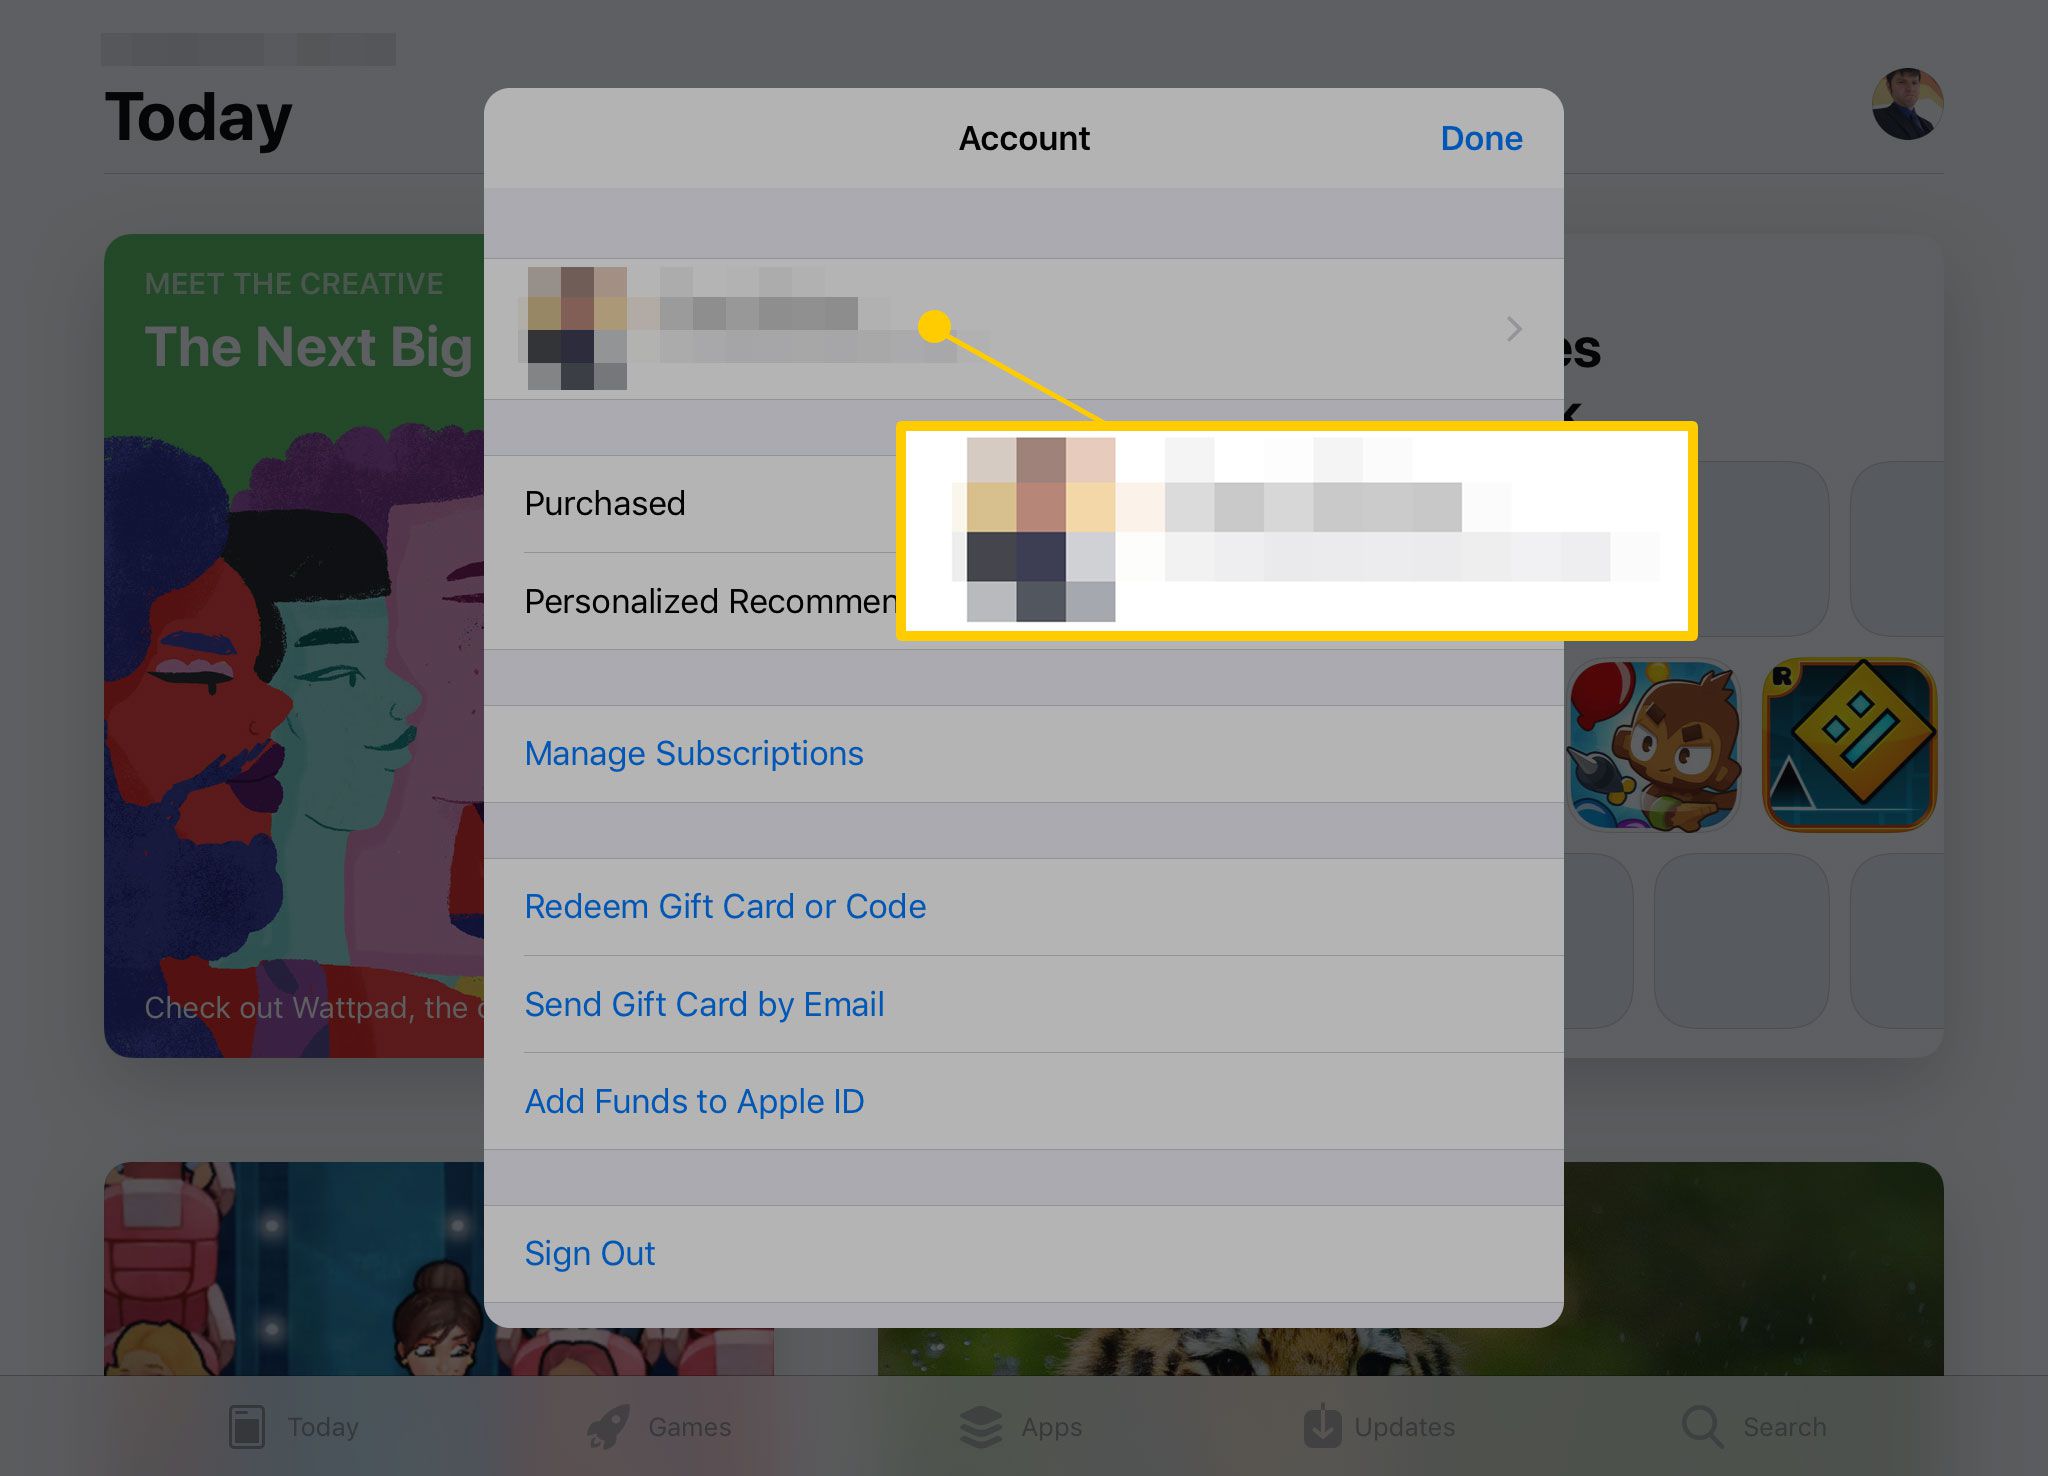 Accountmenu in de App Store op iPad